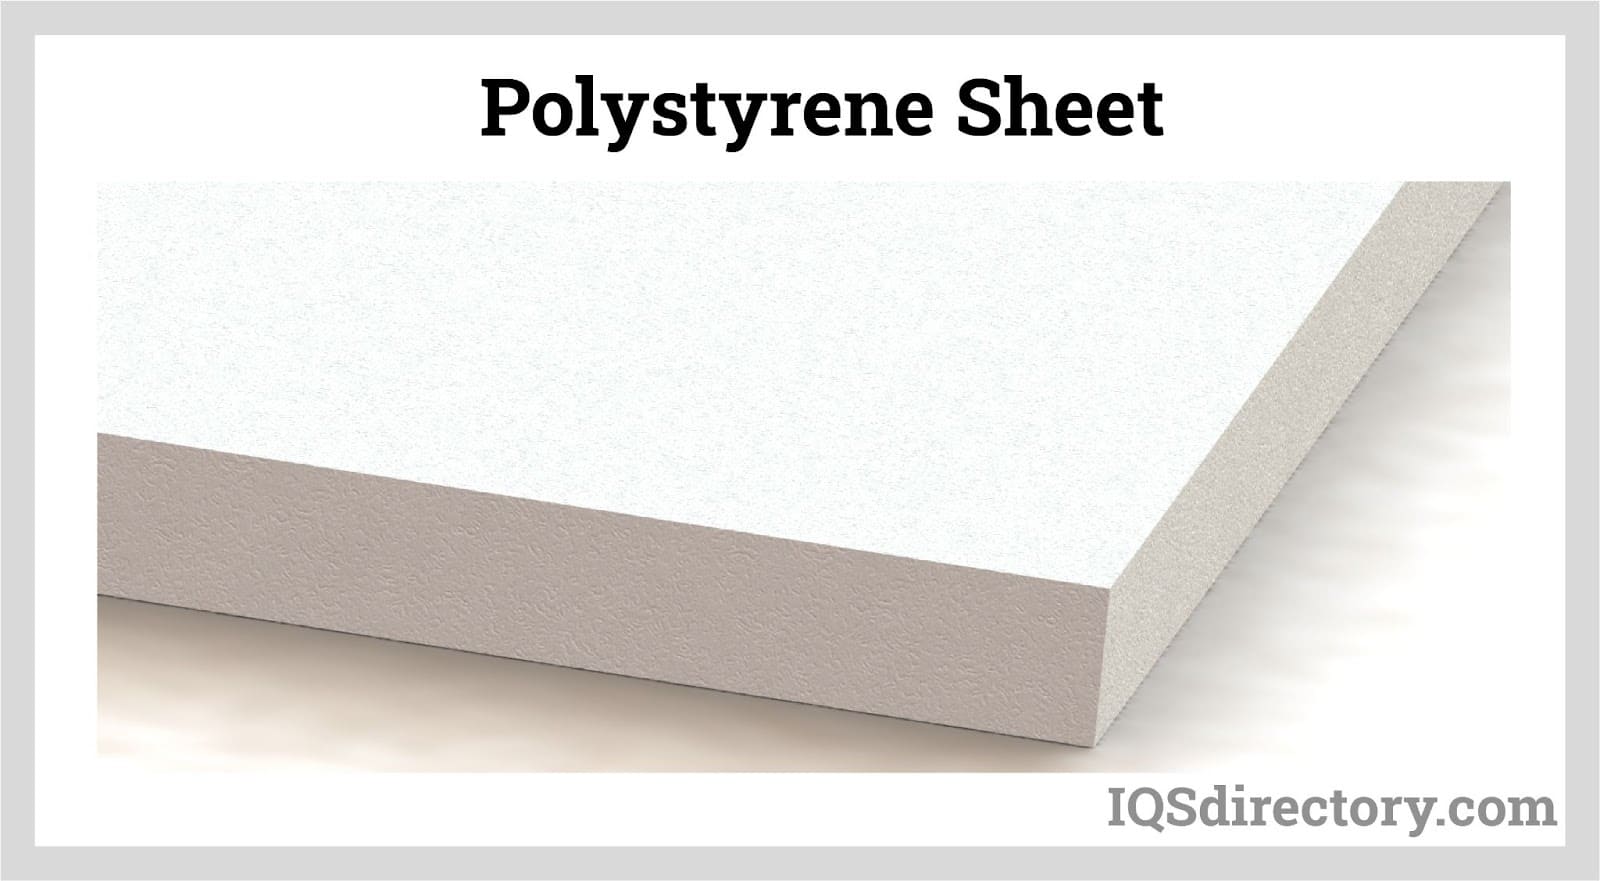  Polystyrene Sheet